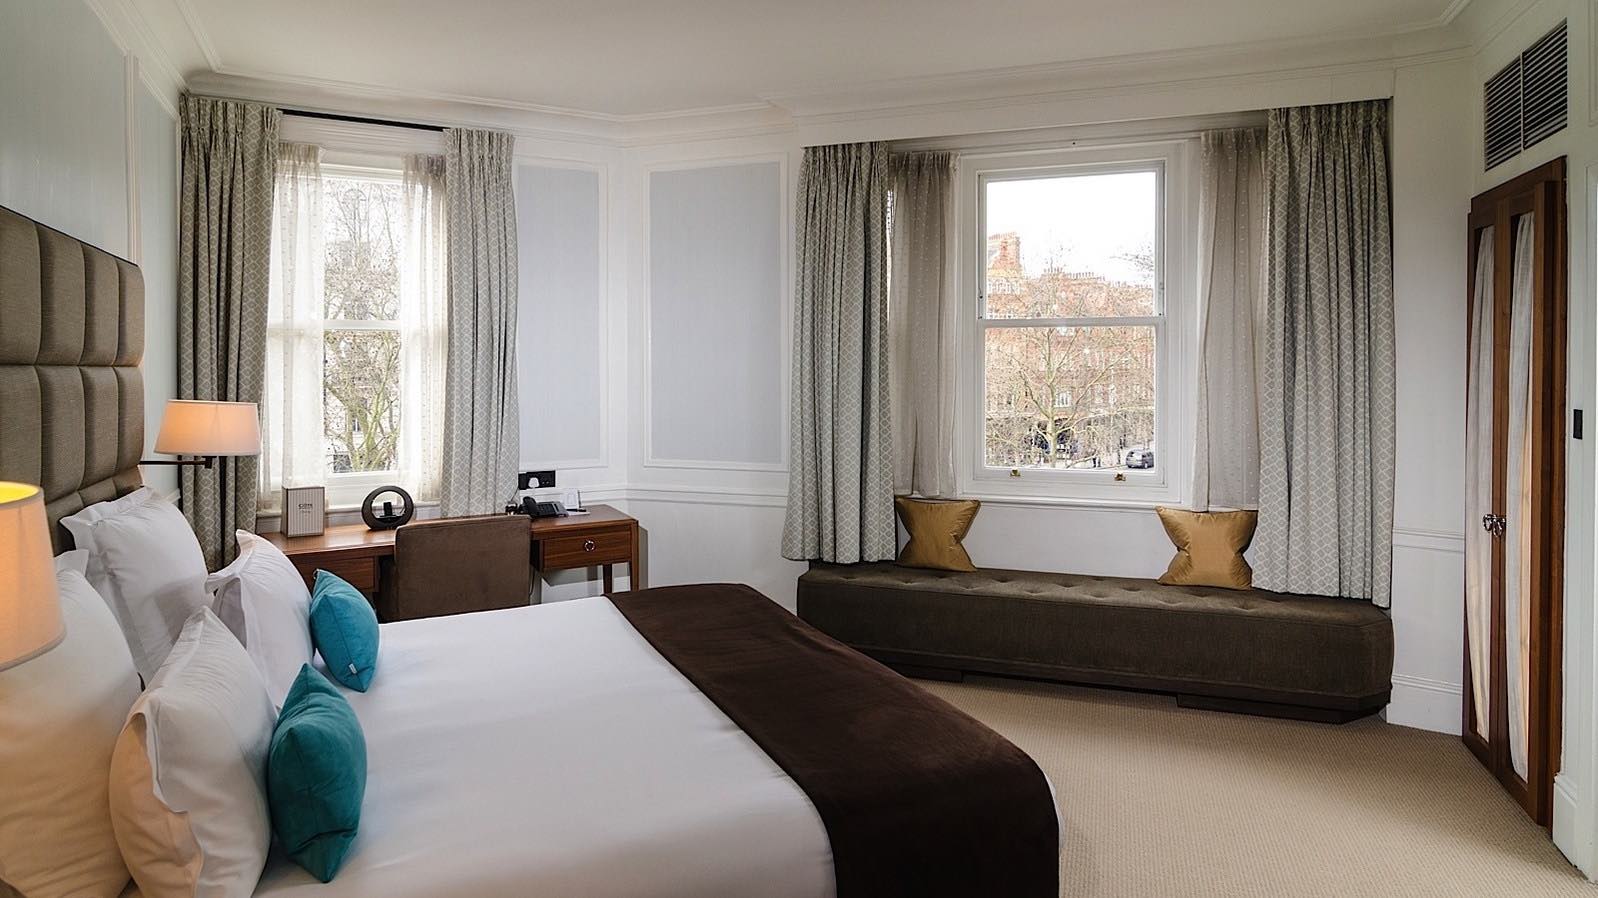 SloaneSquareHotel luxury chelsea hotels bedroom